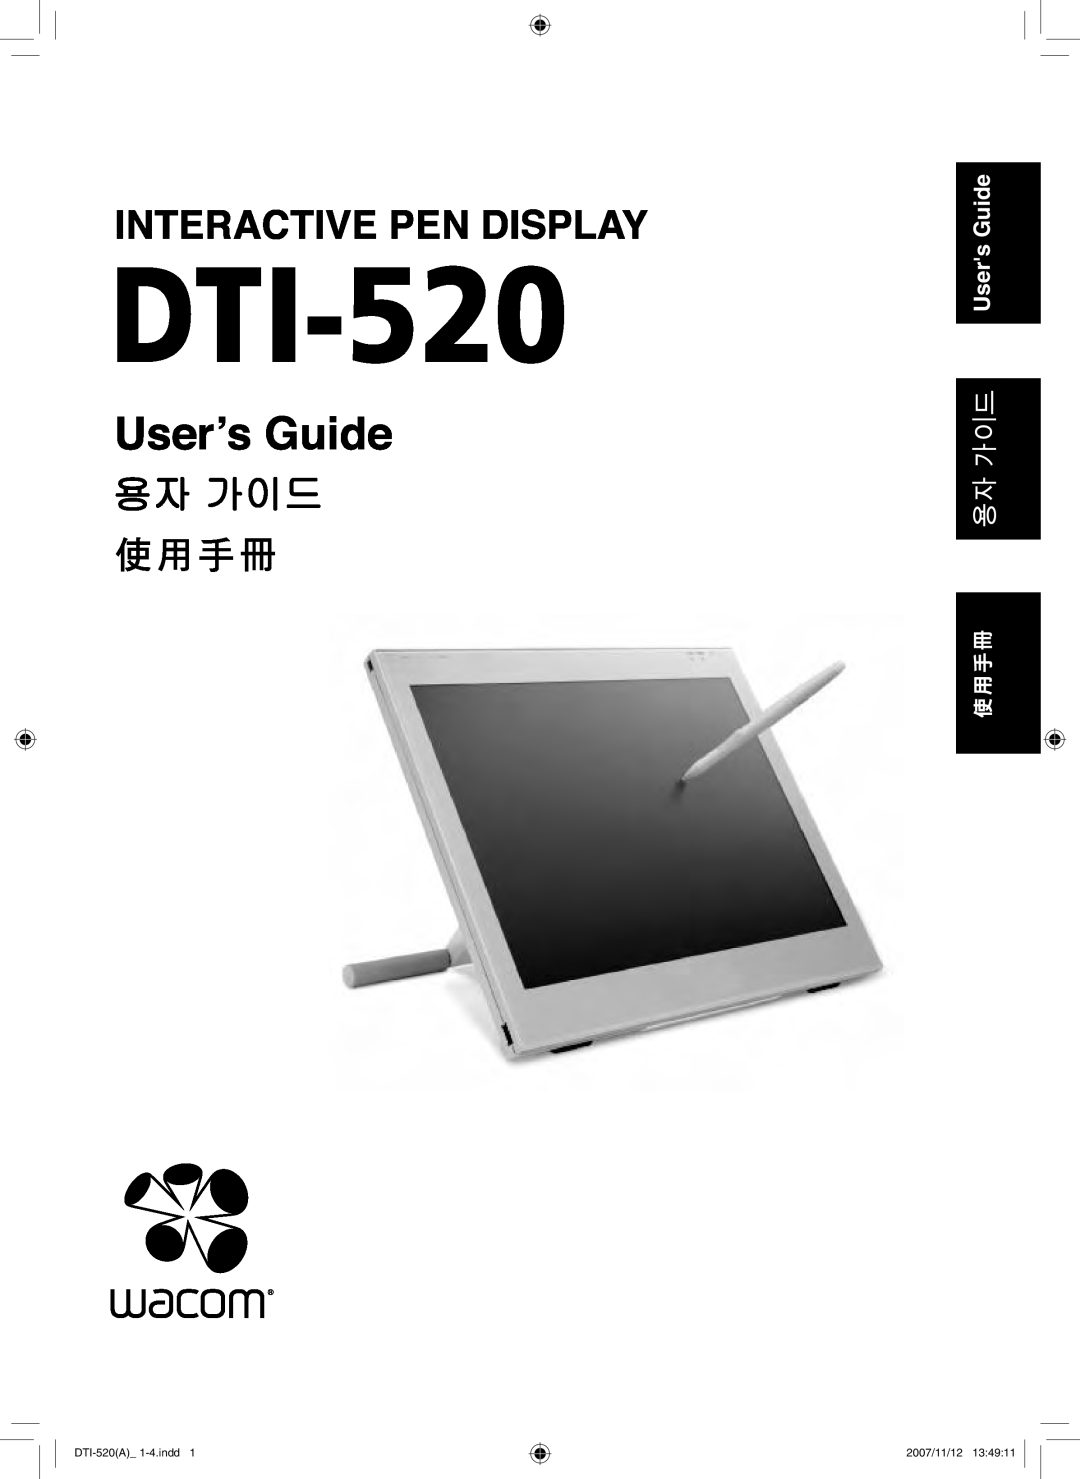 Wacom manual Users Guide, 使用手冊, DTI-520A1-4.indd, 2007/11/12 